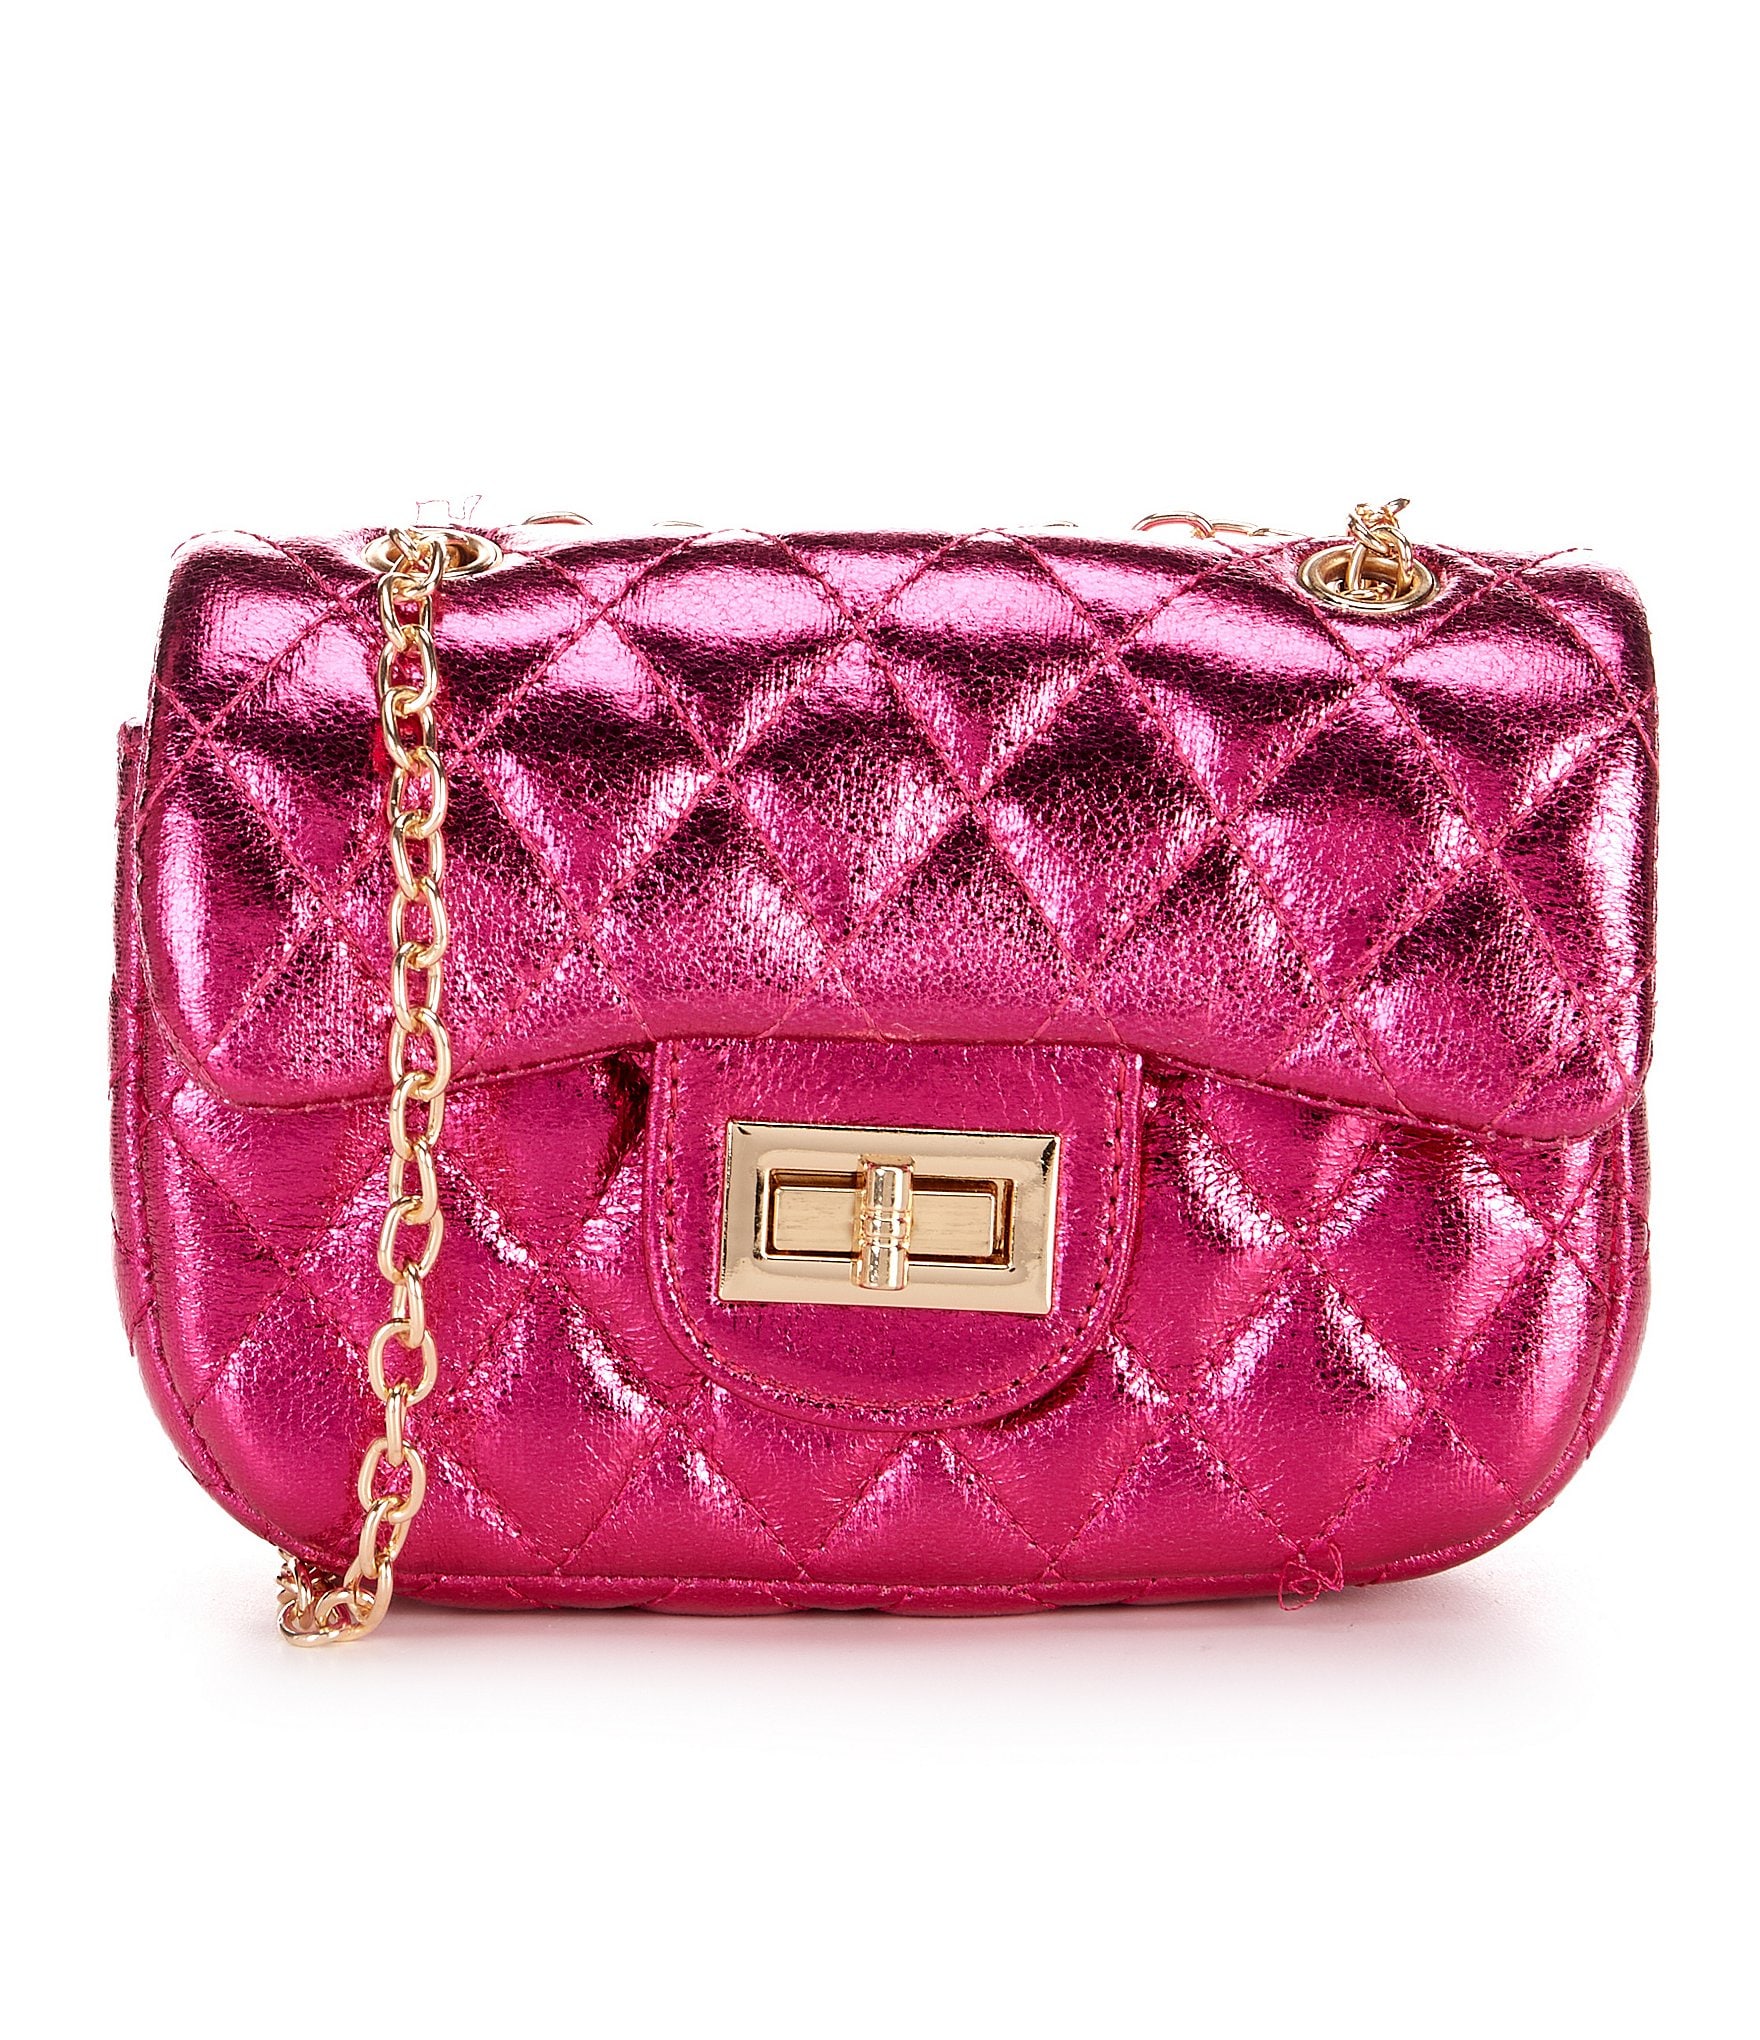 Chanel Jumbo bag hot pink  Pink bags outfit, Hot pink bag, Hot